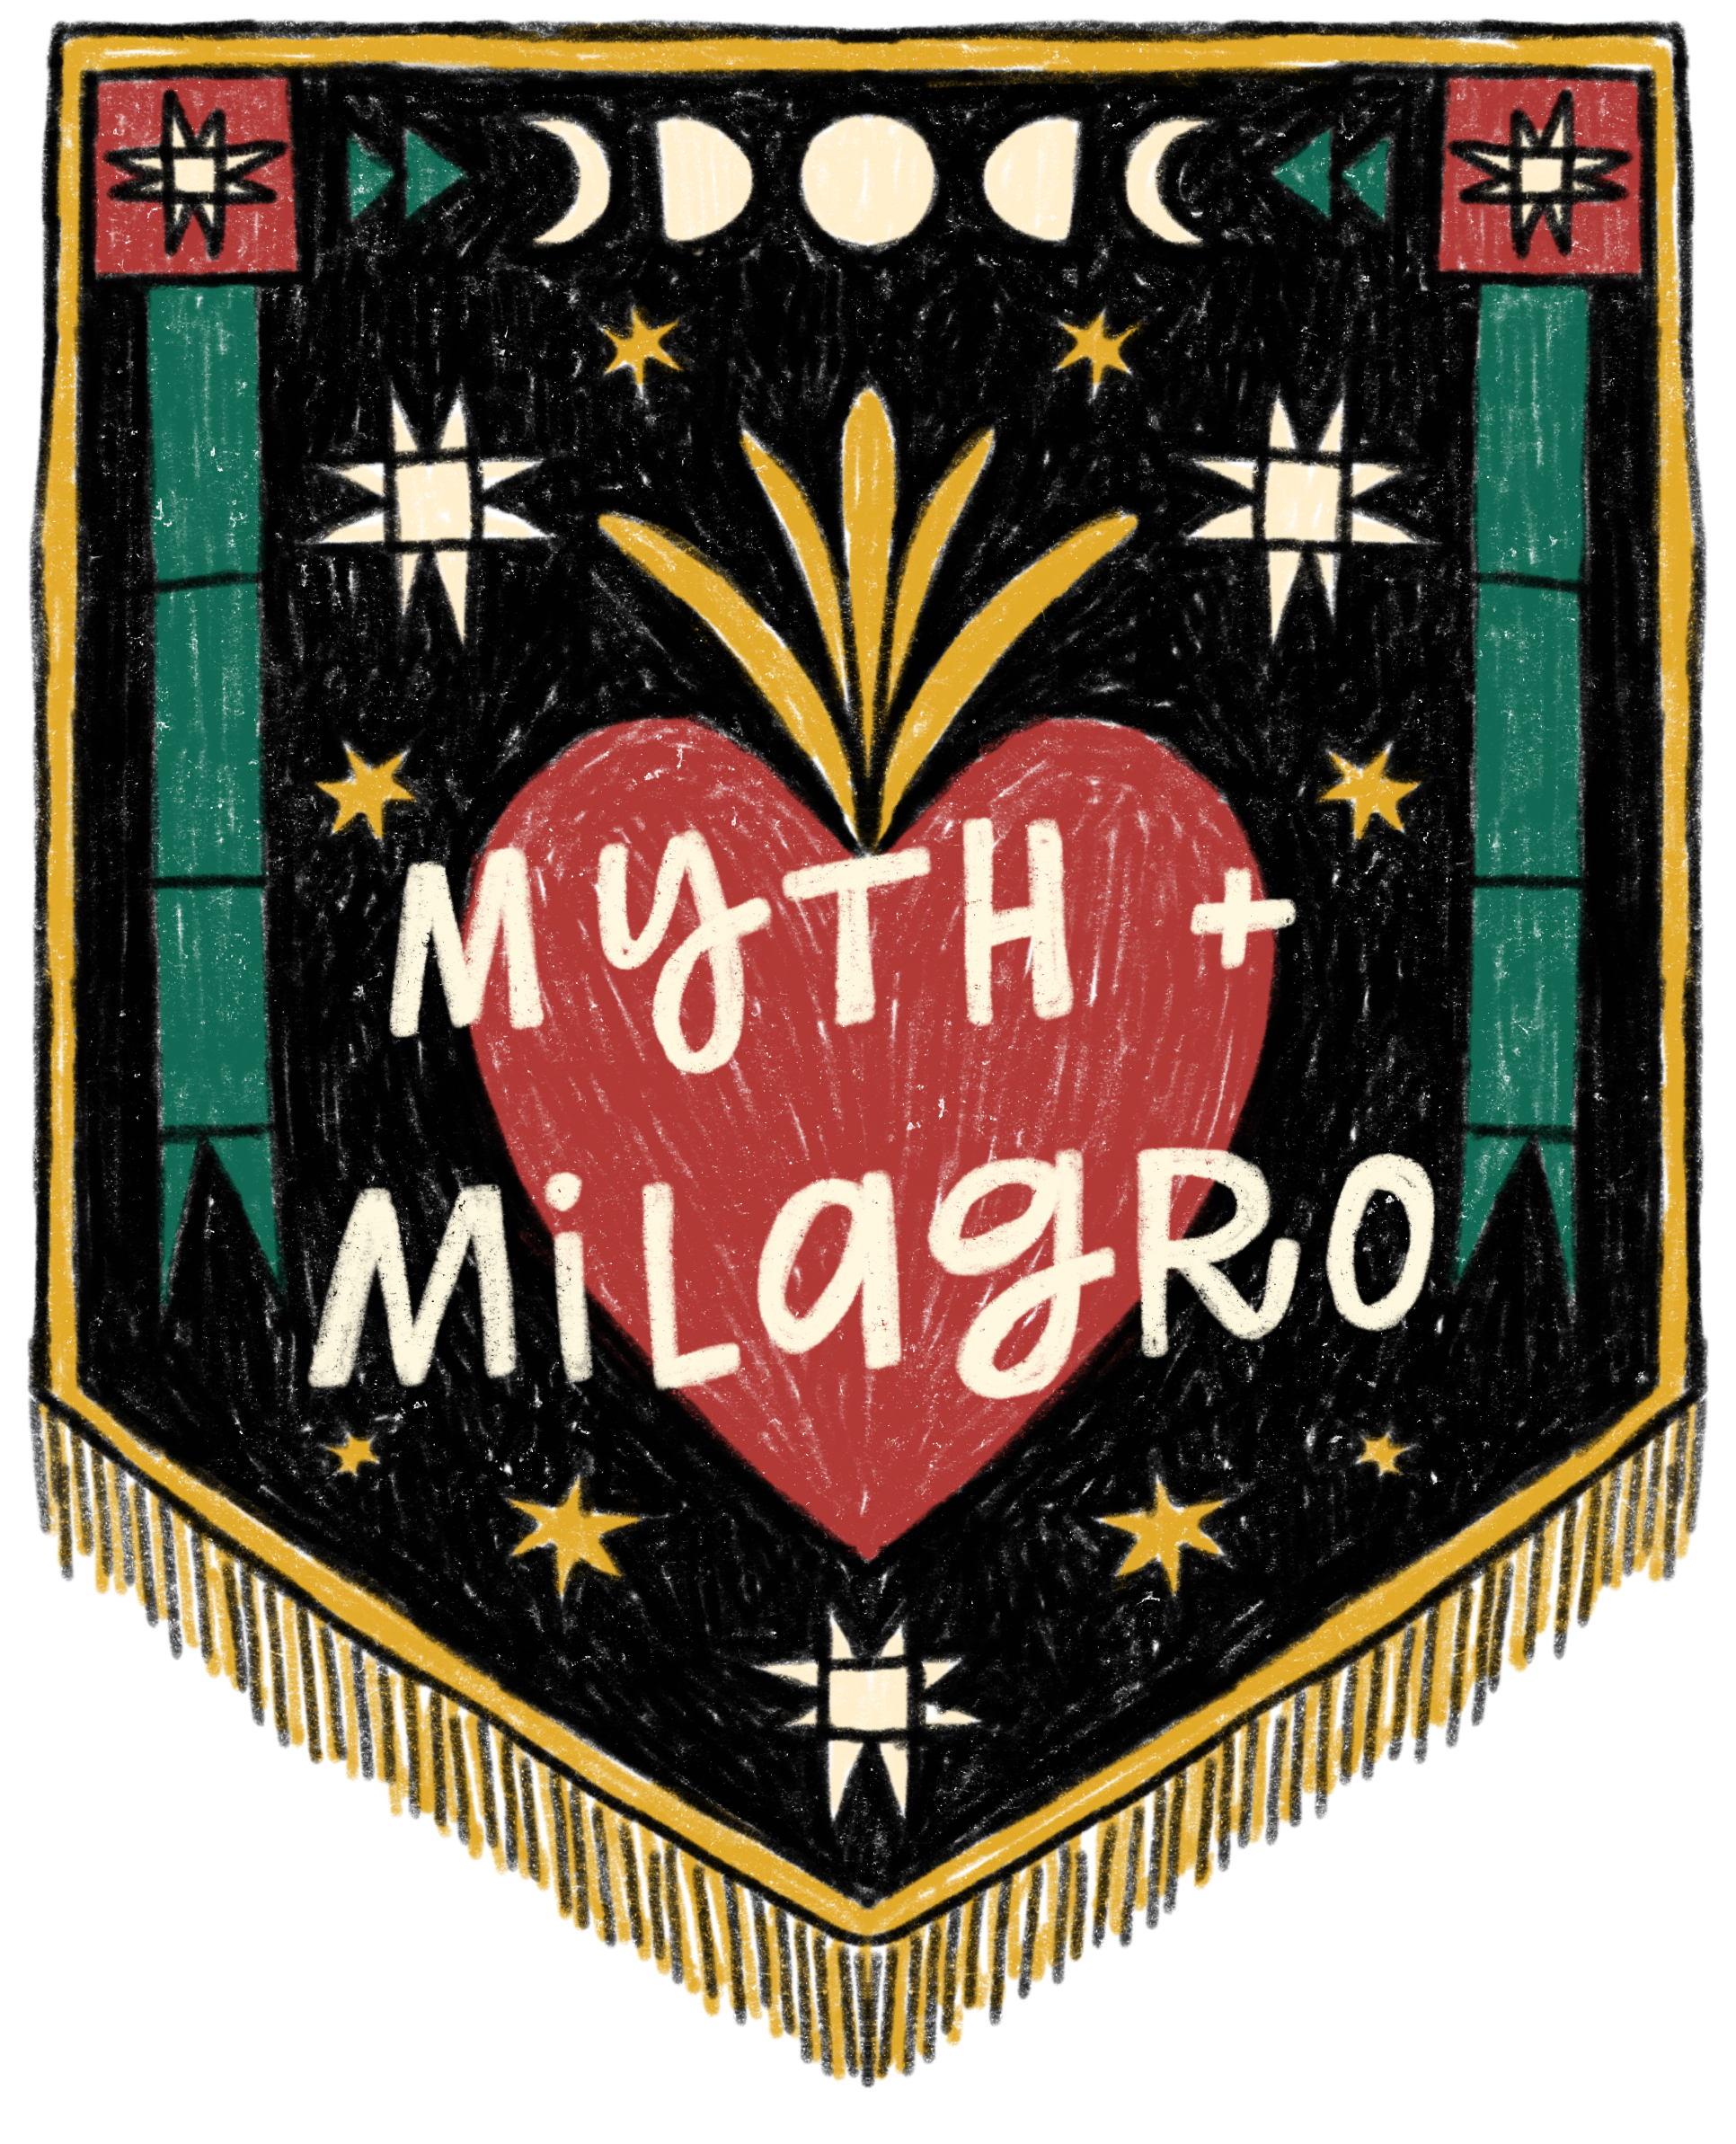 Myth and Milagro